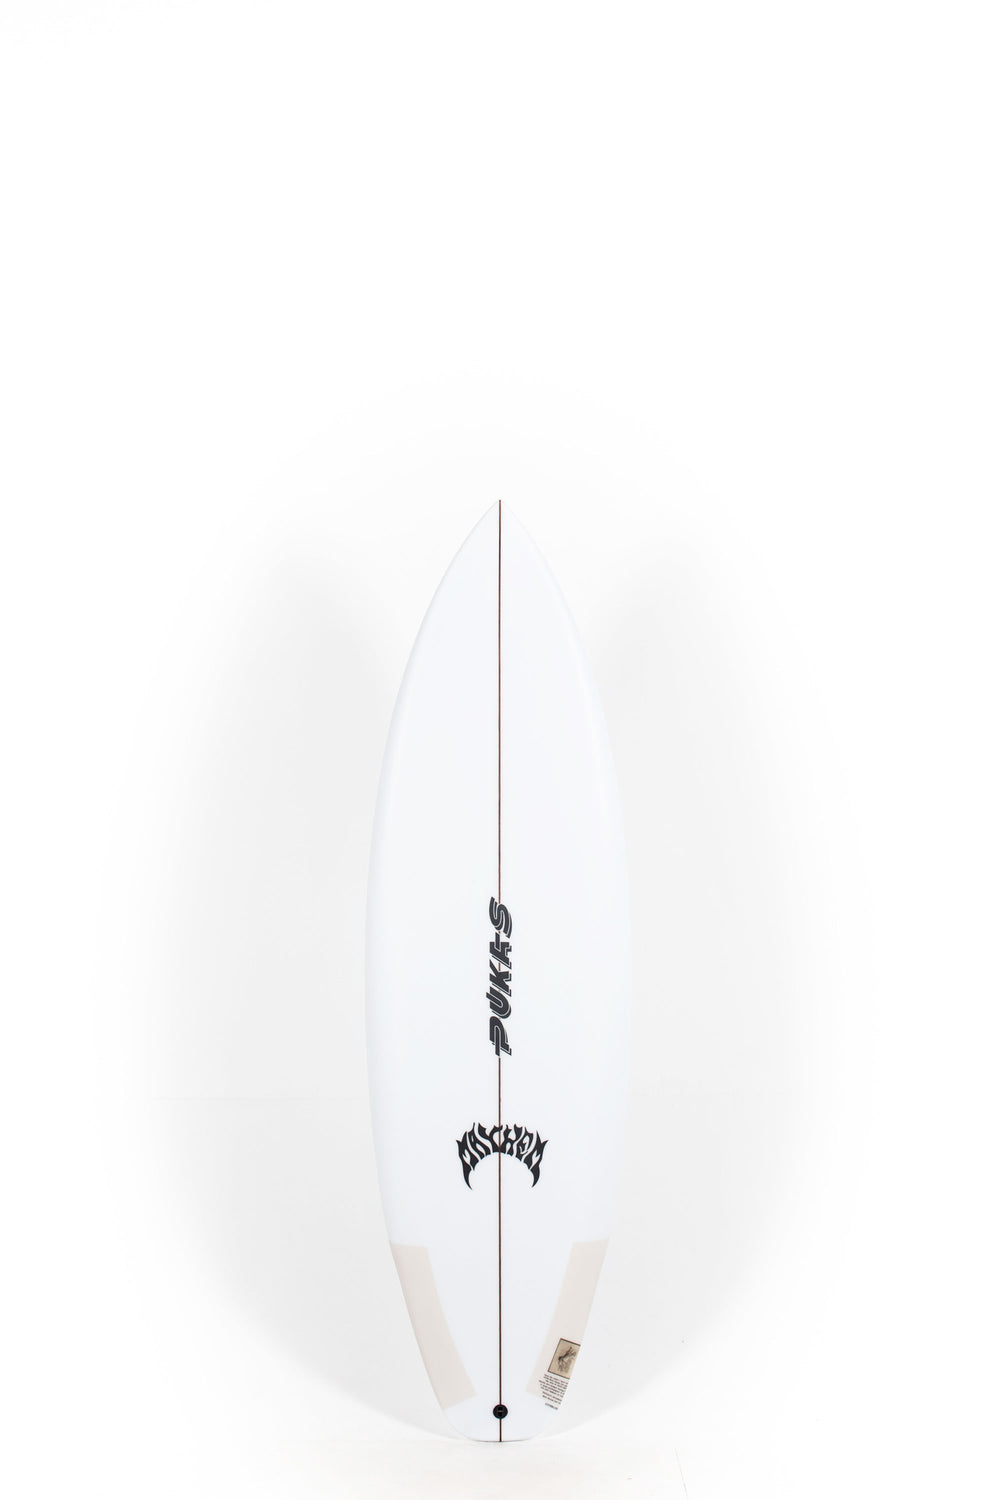 Pukas Surf shop - Pukas Surfboard - HYPERLINK by Matt Biolos -  5'9